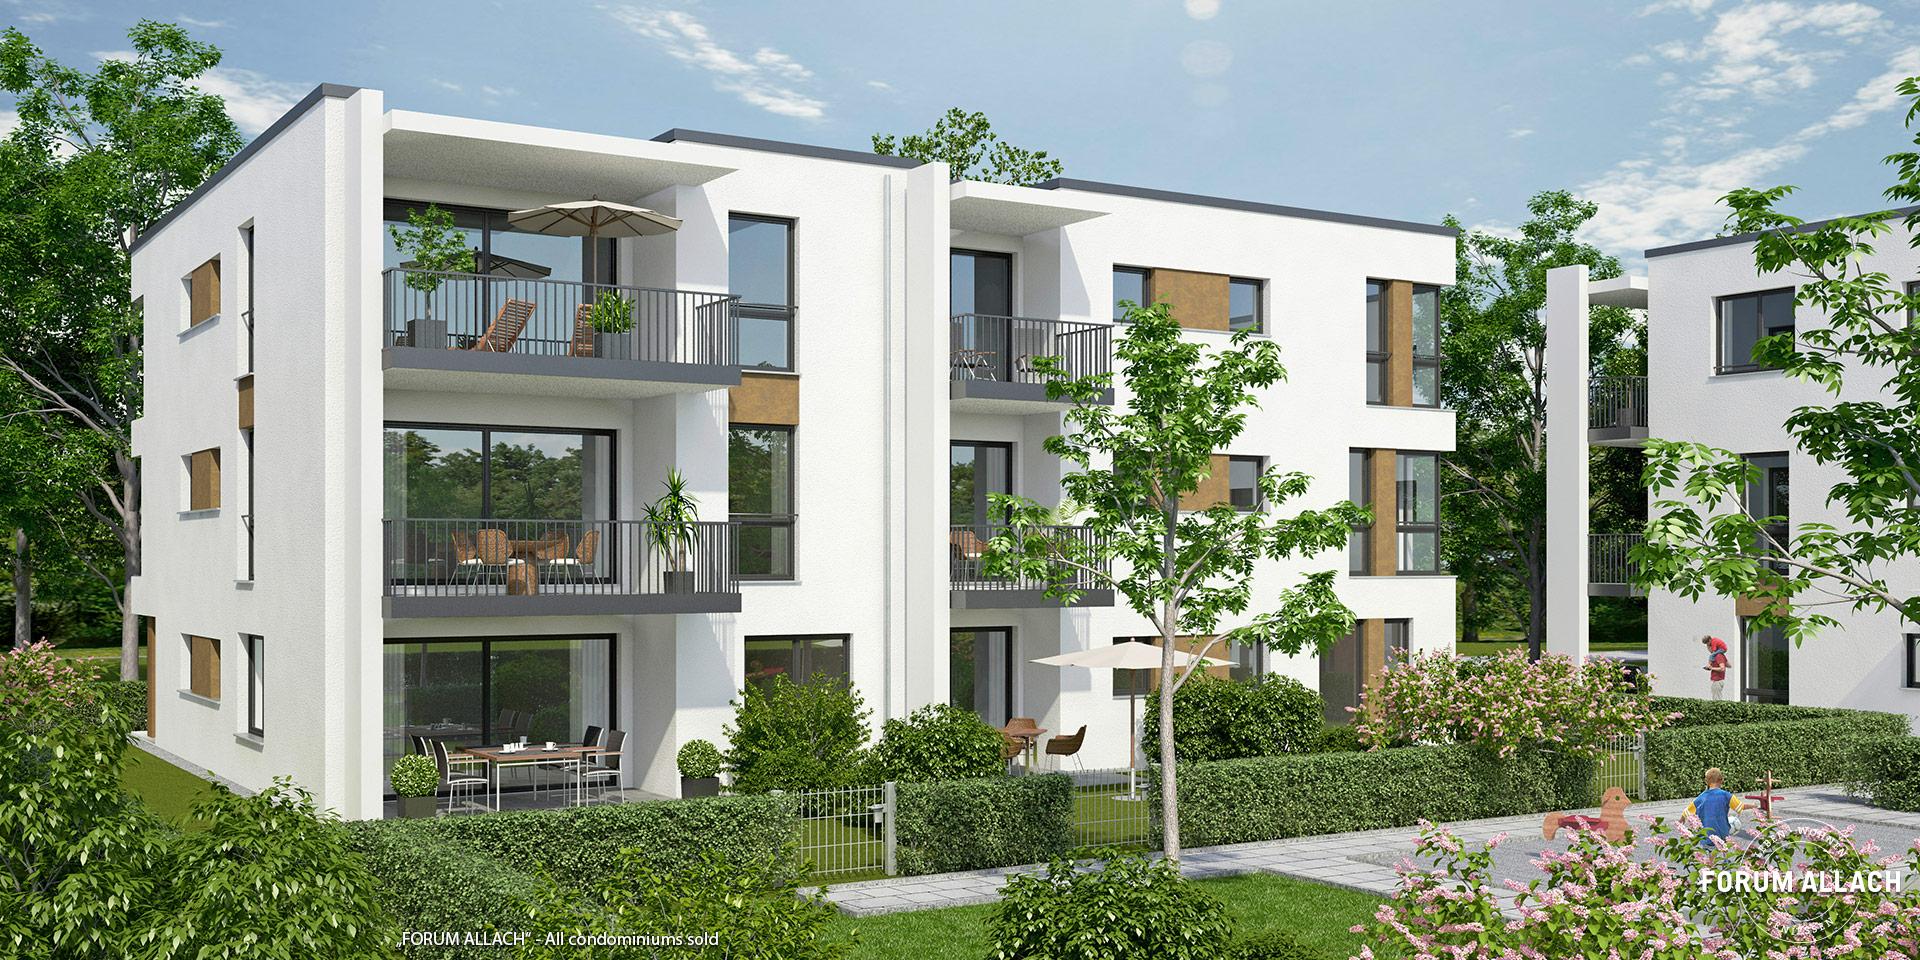 “FORUM ALLACH” in Munich-Allach: All condominiums sold